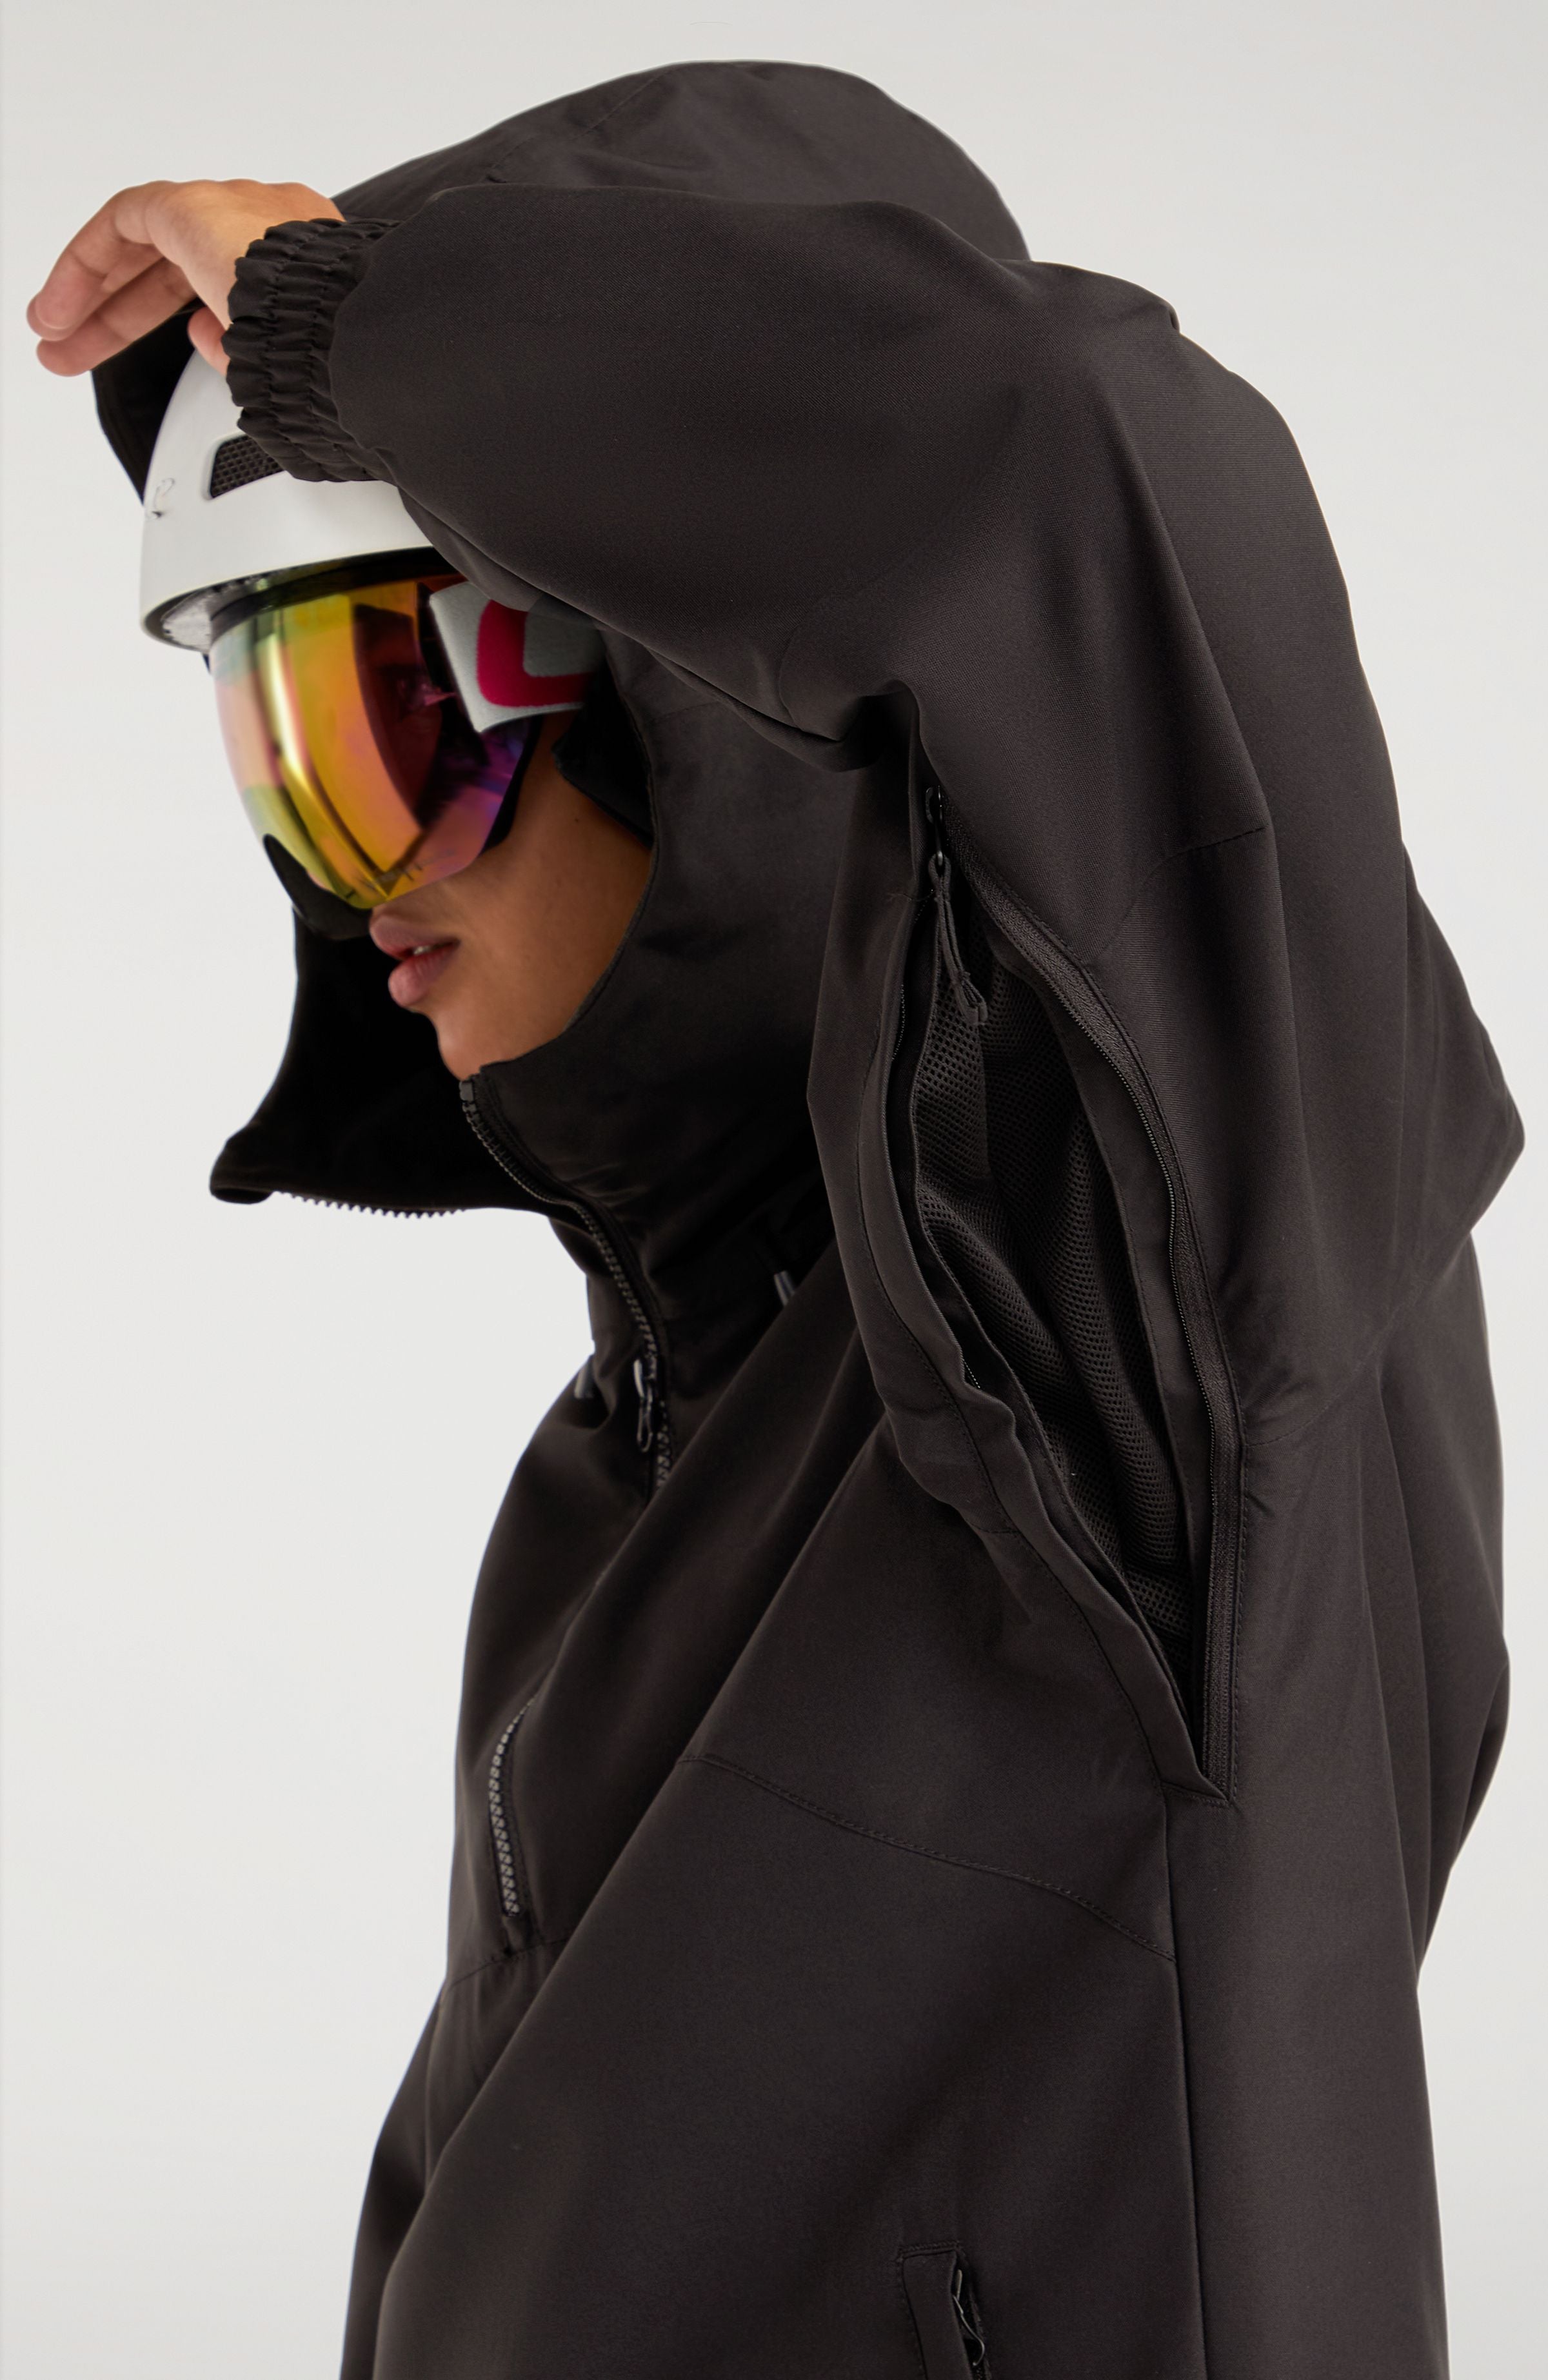 Women Ski and Snowboard jackets